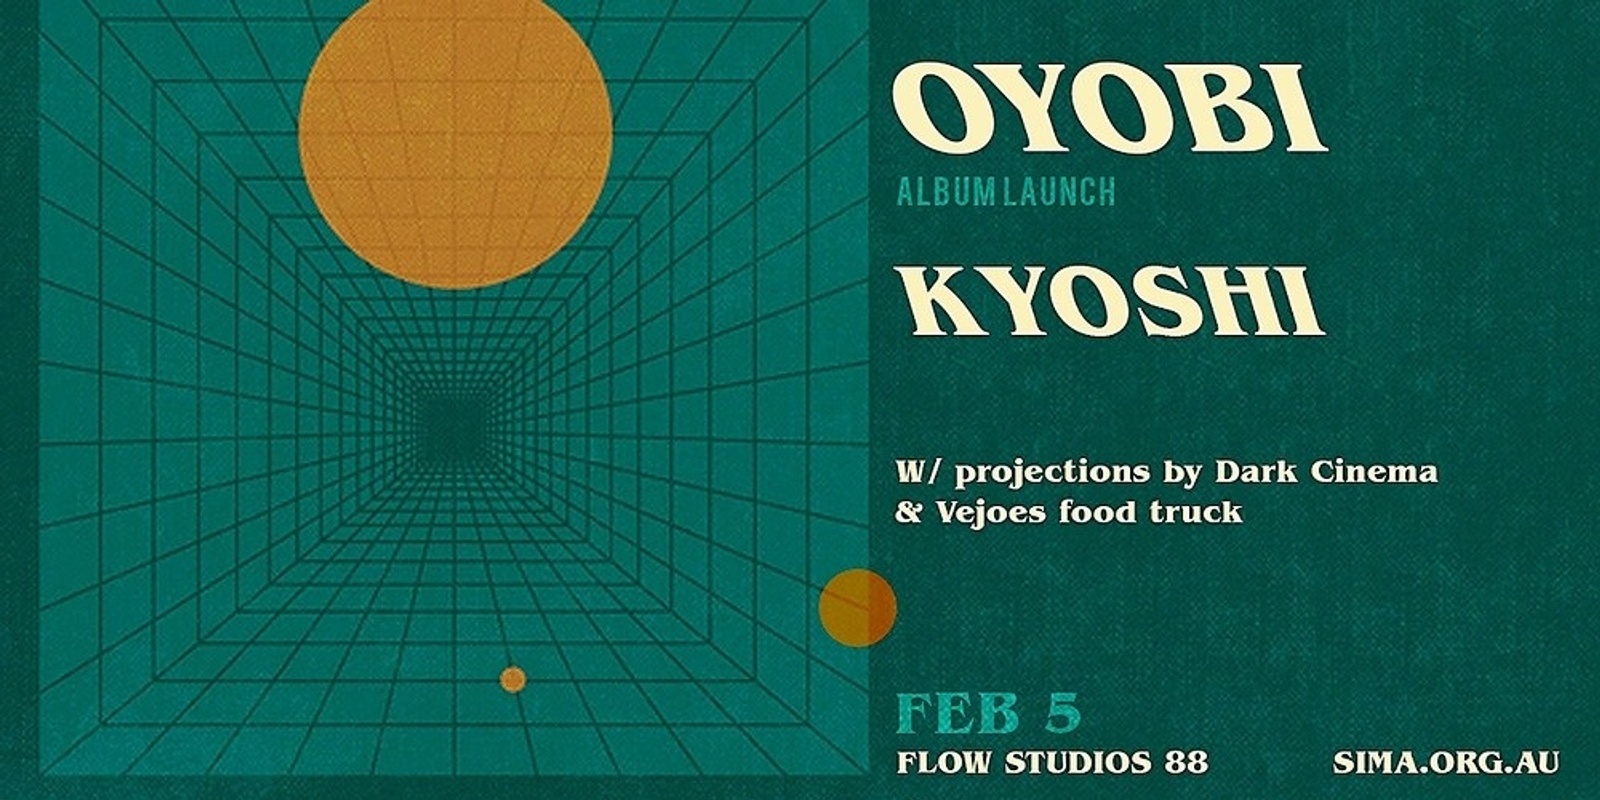 Banner image for OYOBI Album launch + Kyoshi @ Flow Studios 88